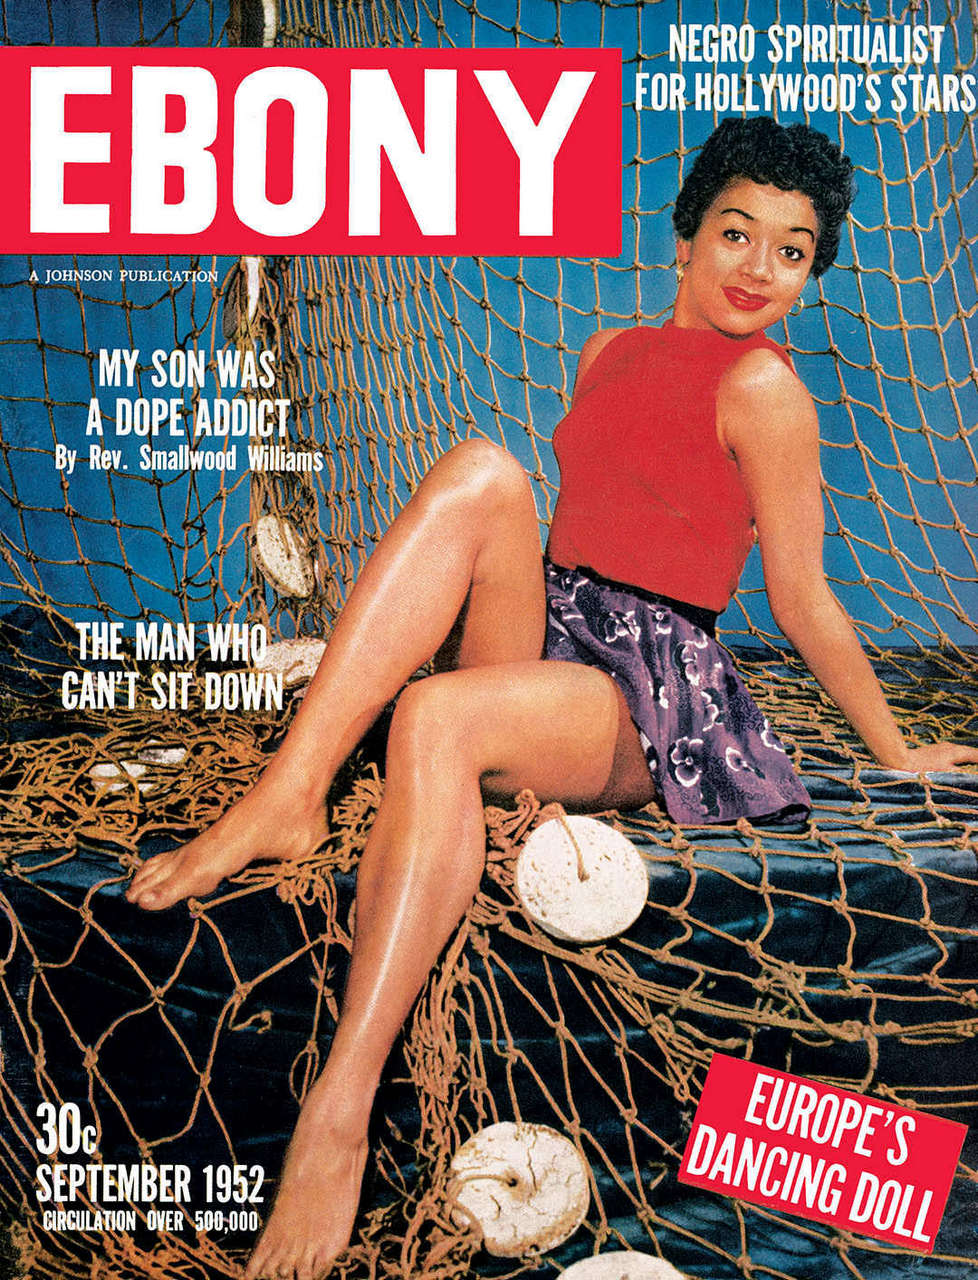 1940s ebony magazine